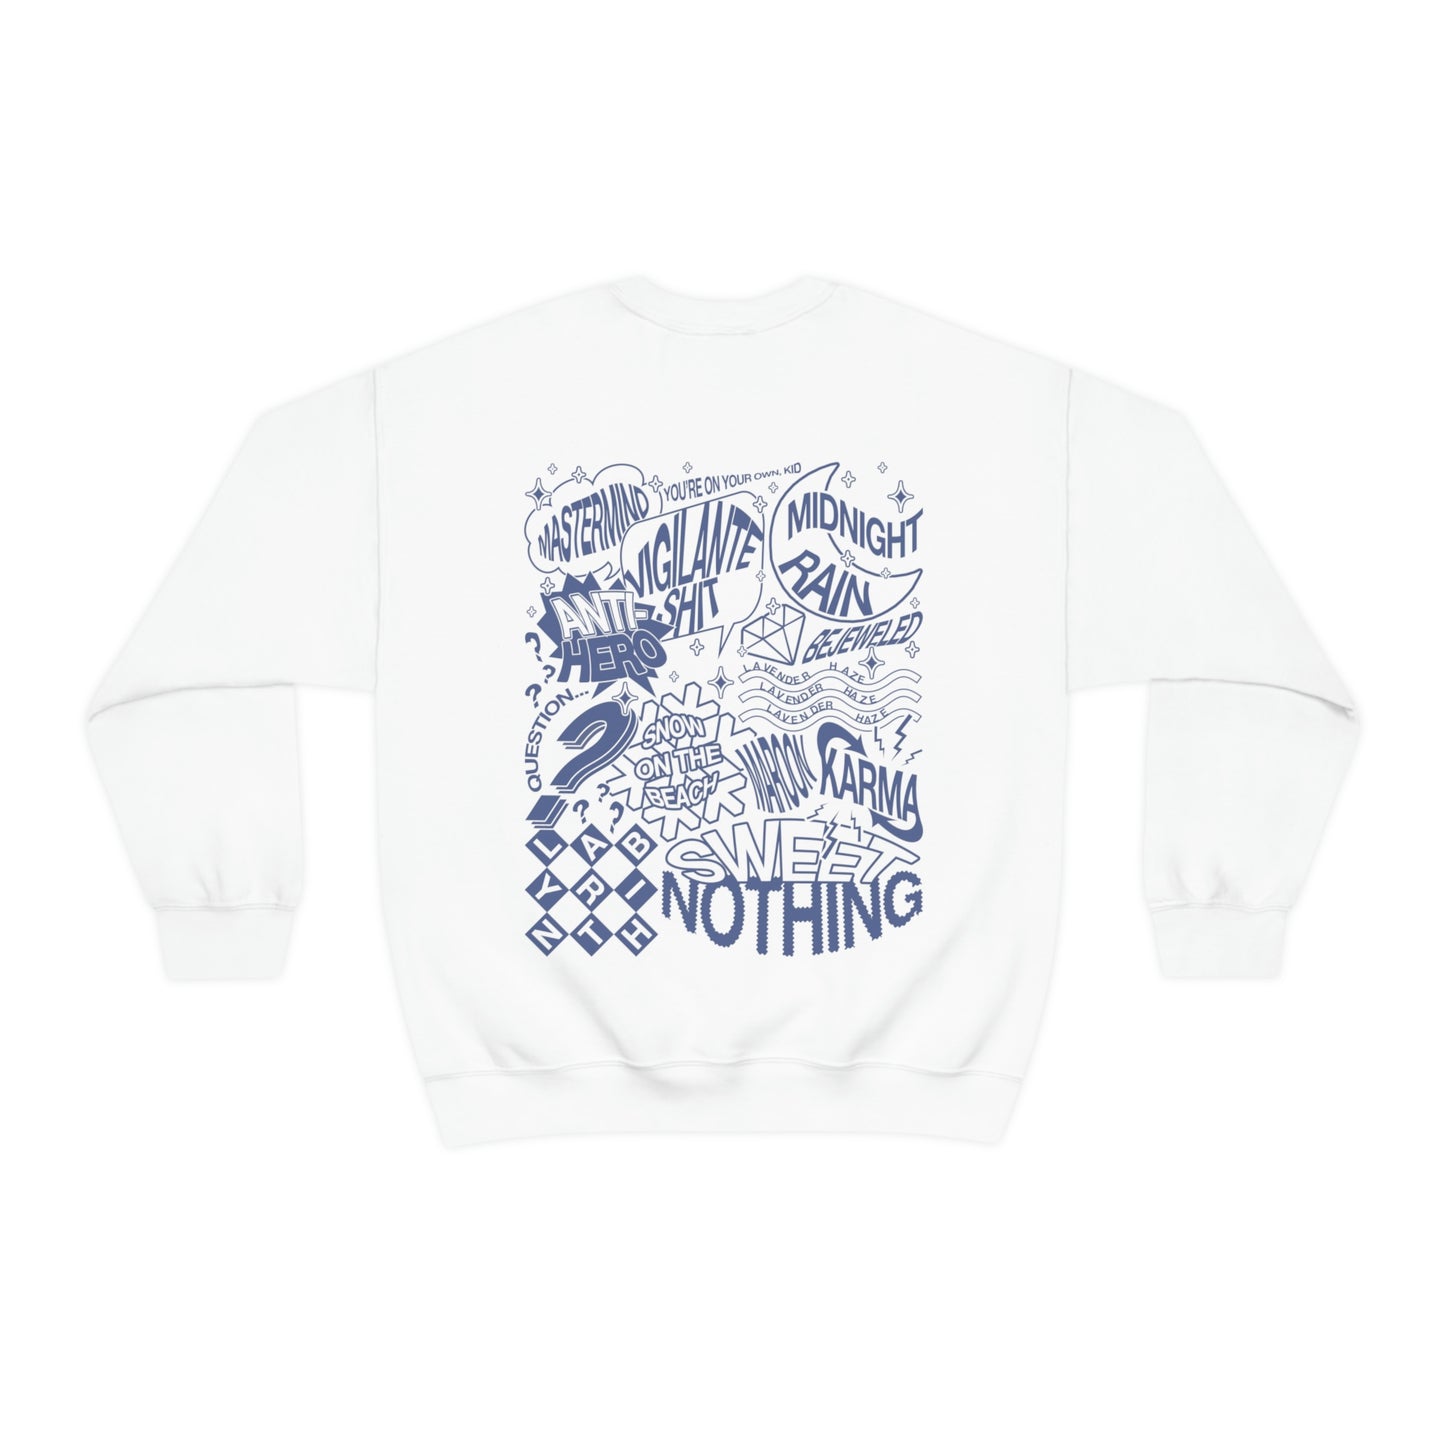 Midnights Sweatshirt, 2 Sided Print